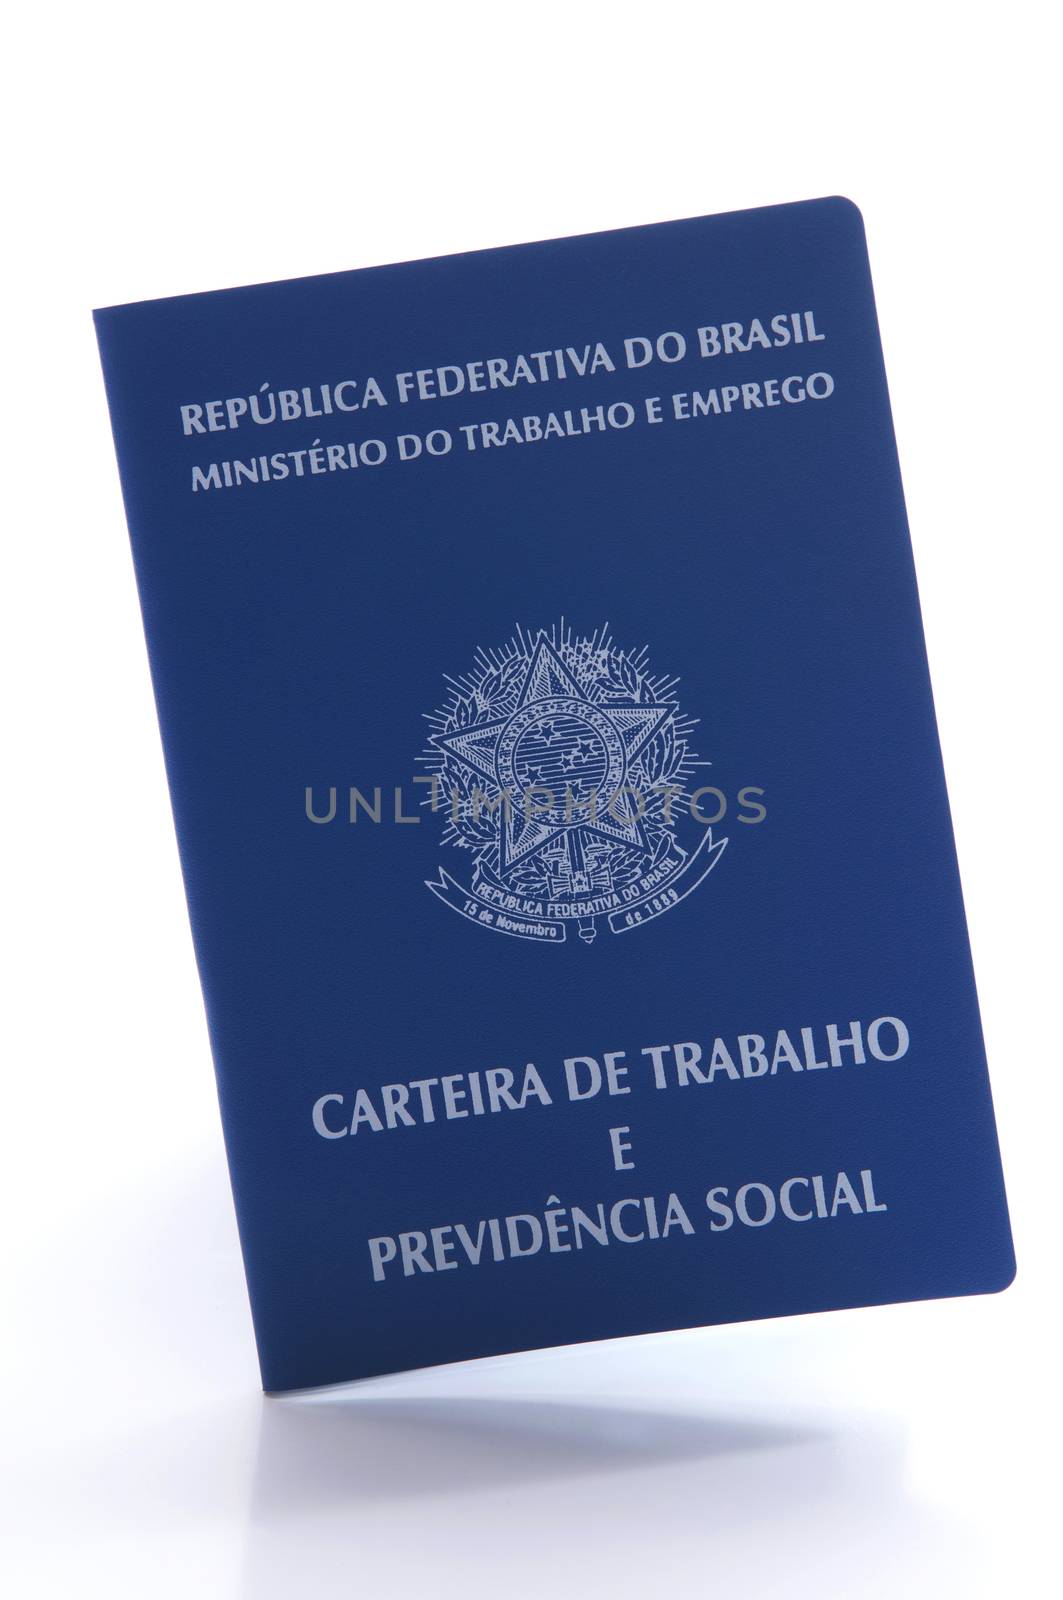 Brazilian work document and social security document (carteira de trabalho) on white background